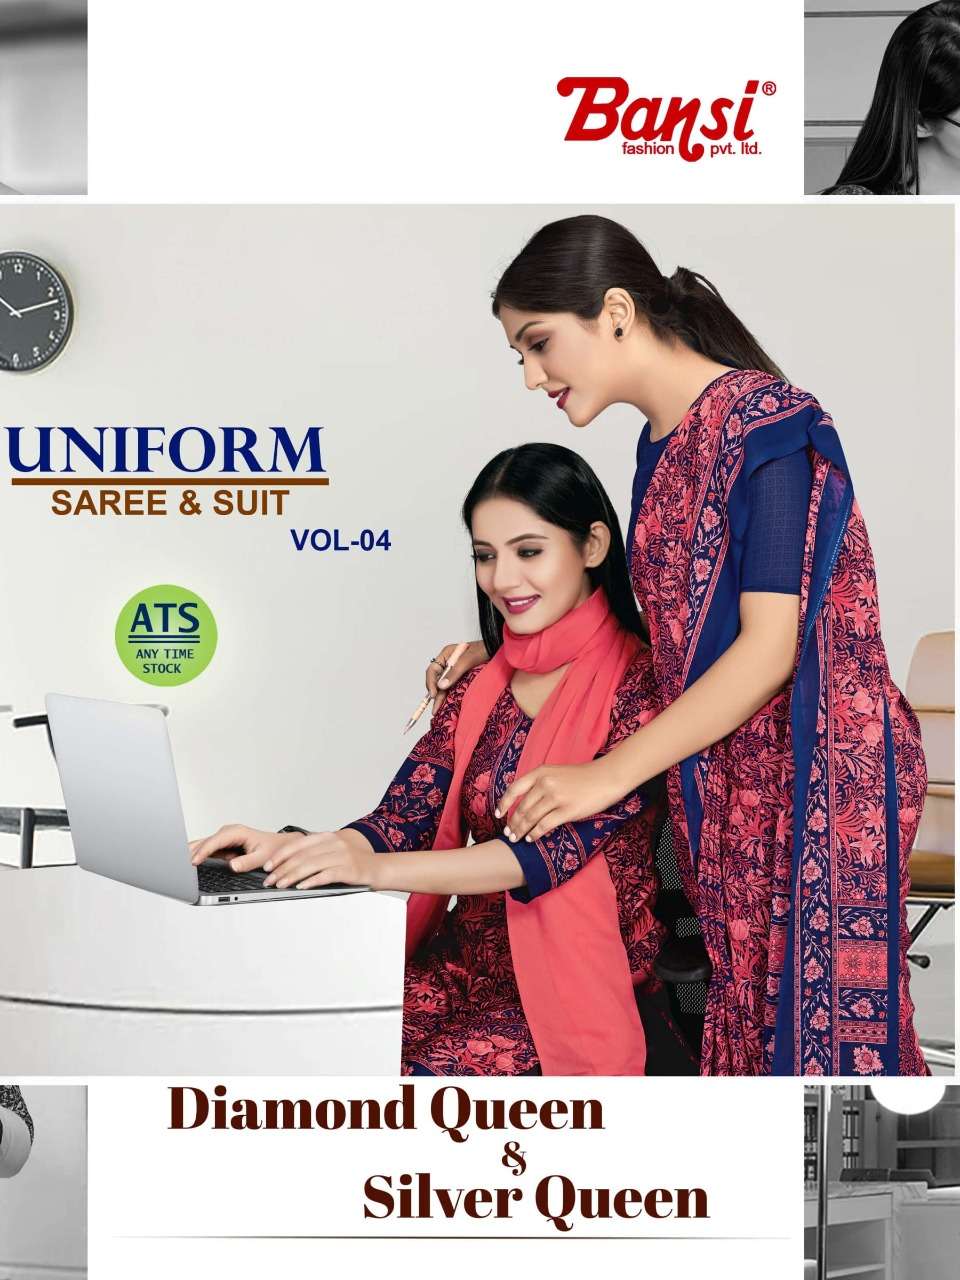 bansi diamond queen & silver queen uniform saree & suit vol 4 